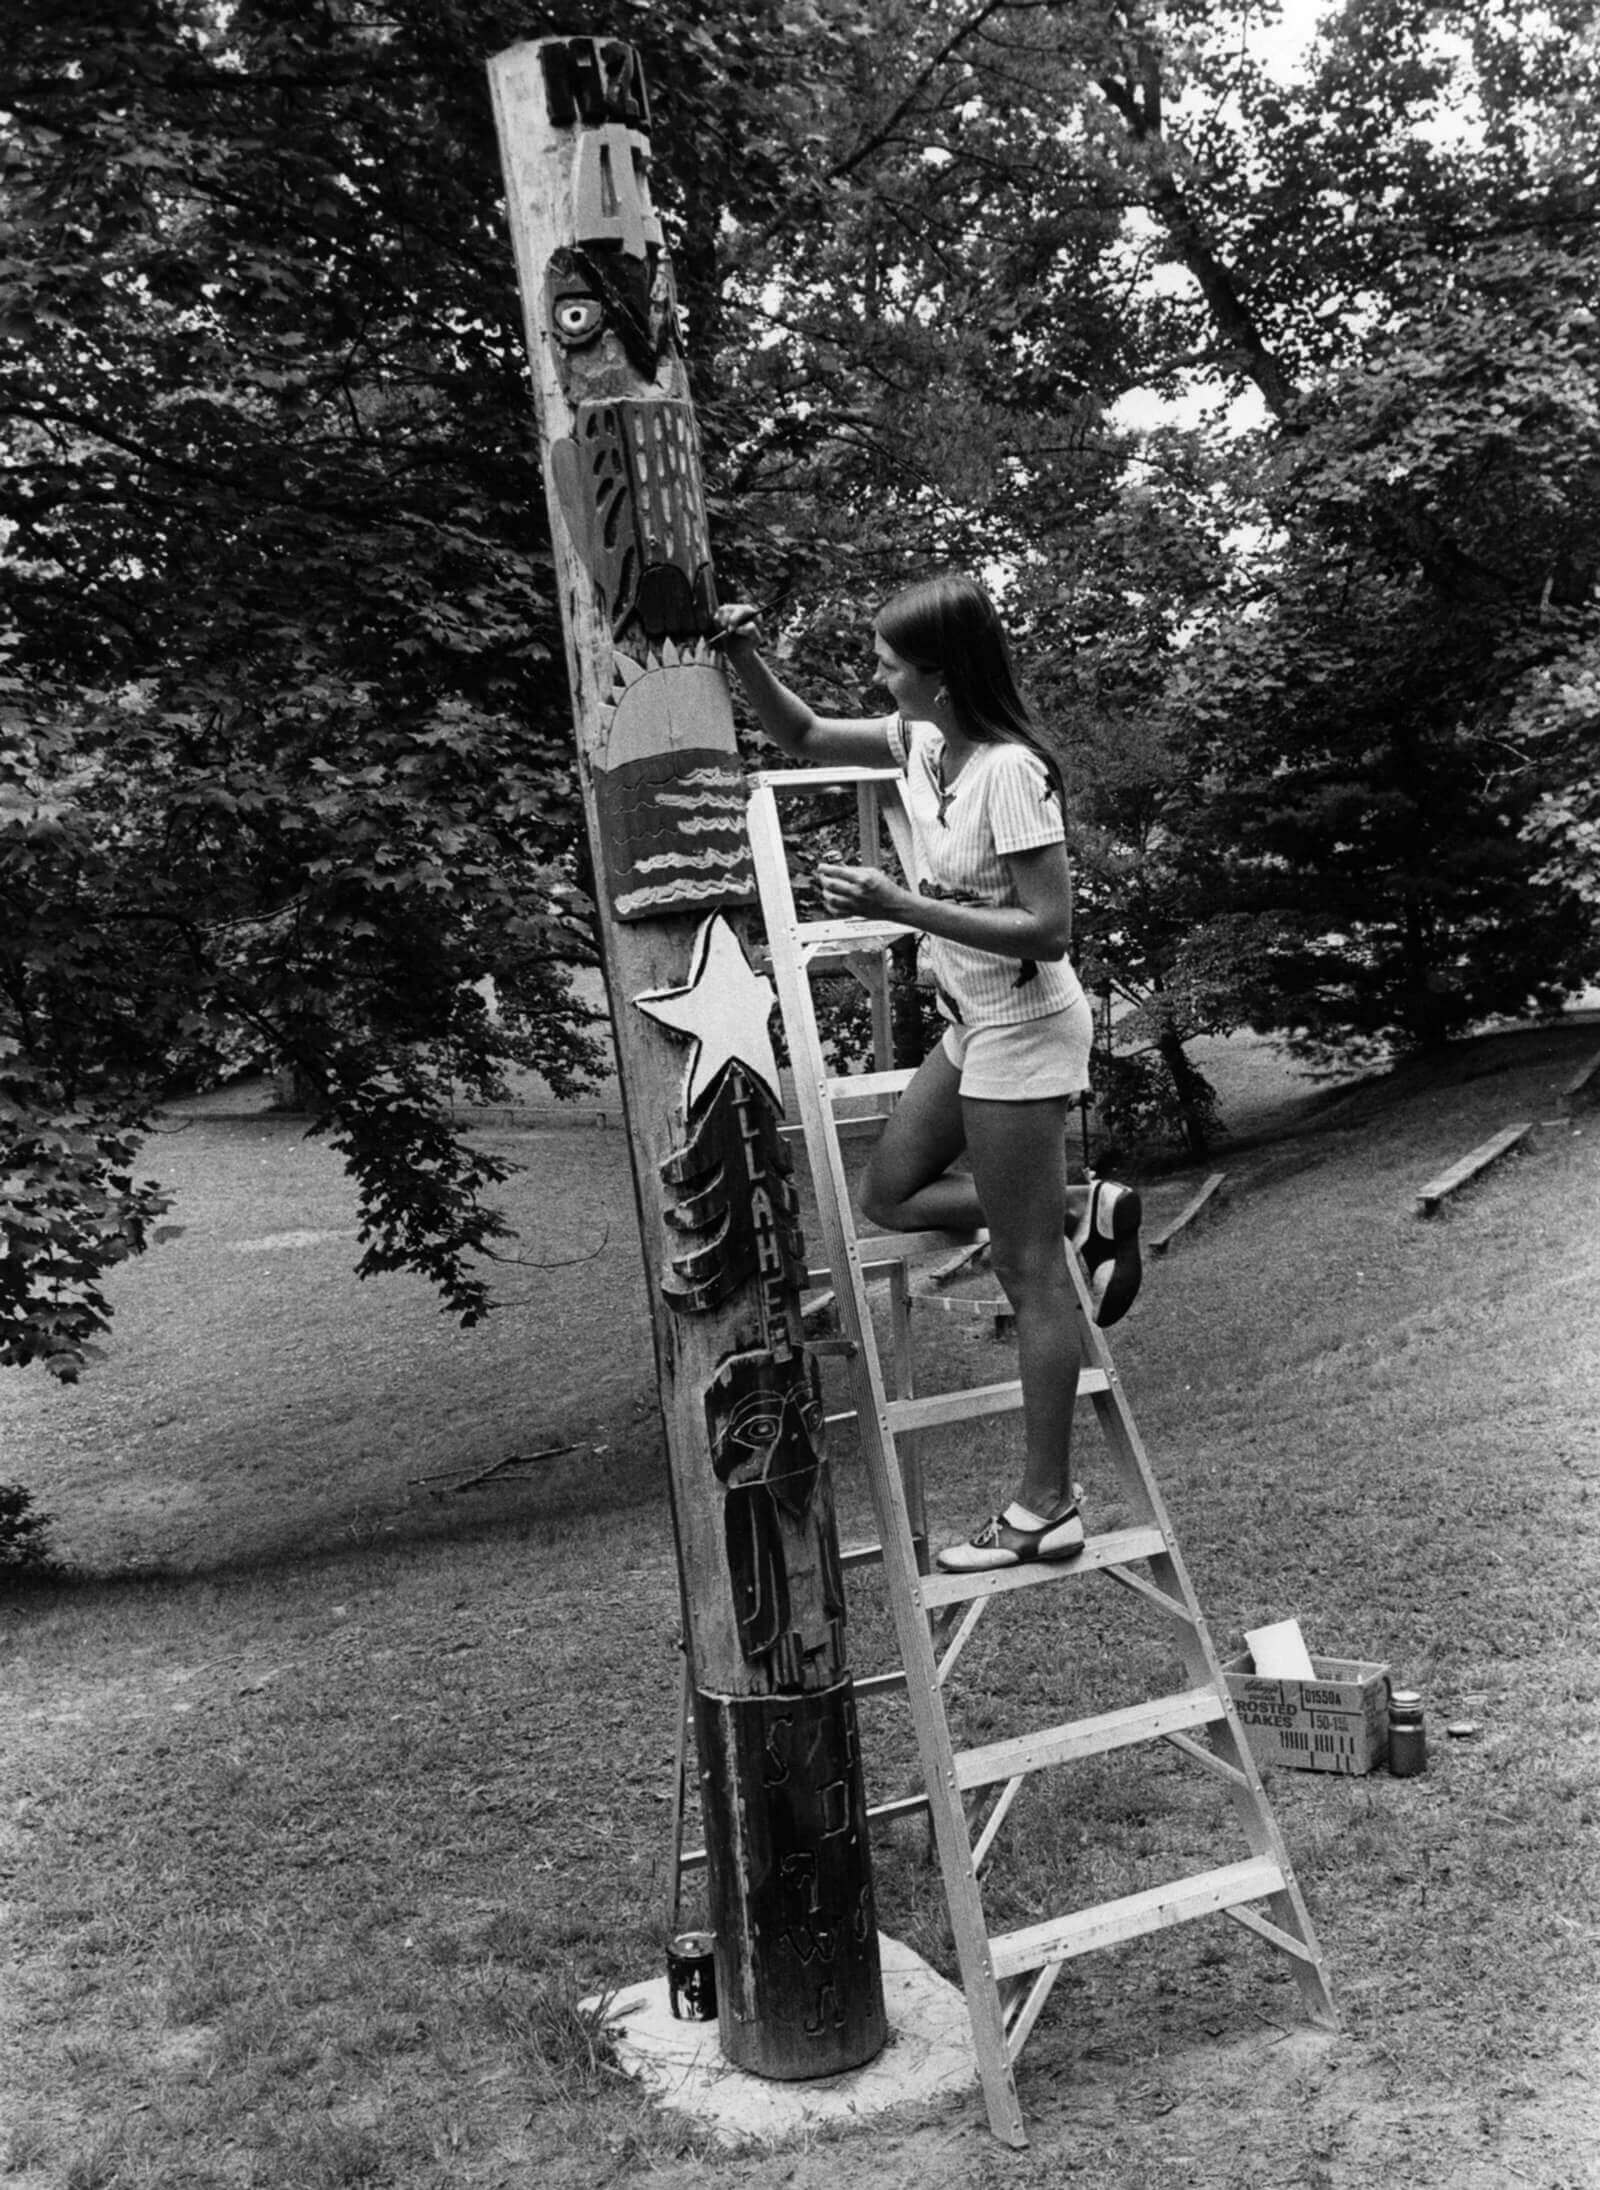 A girl decorates a “totem pole” at Camp Illahee, North Carolina, 1970s.